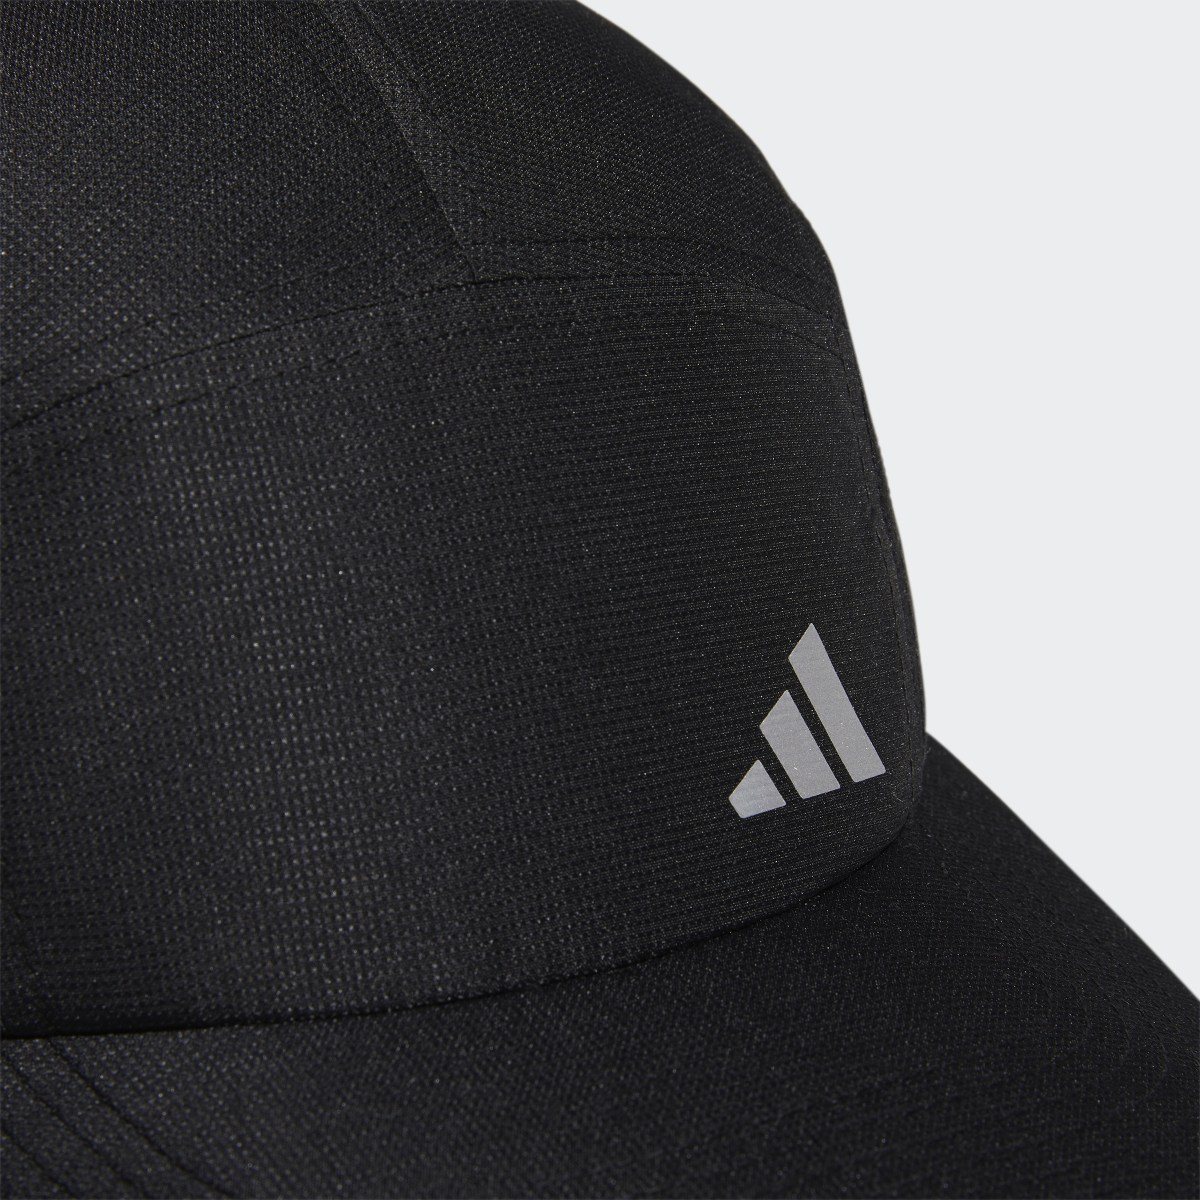 Adidas Superlite Trainer Hat. 6